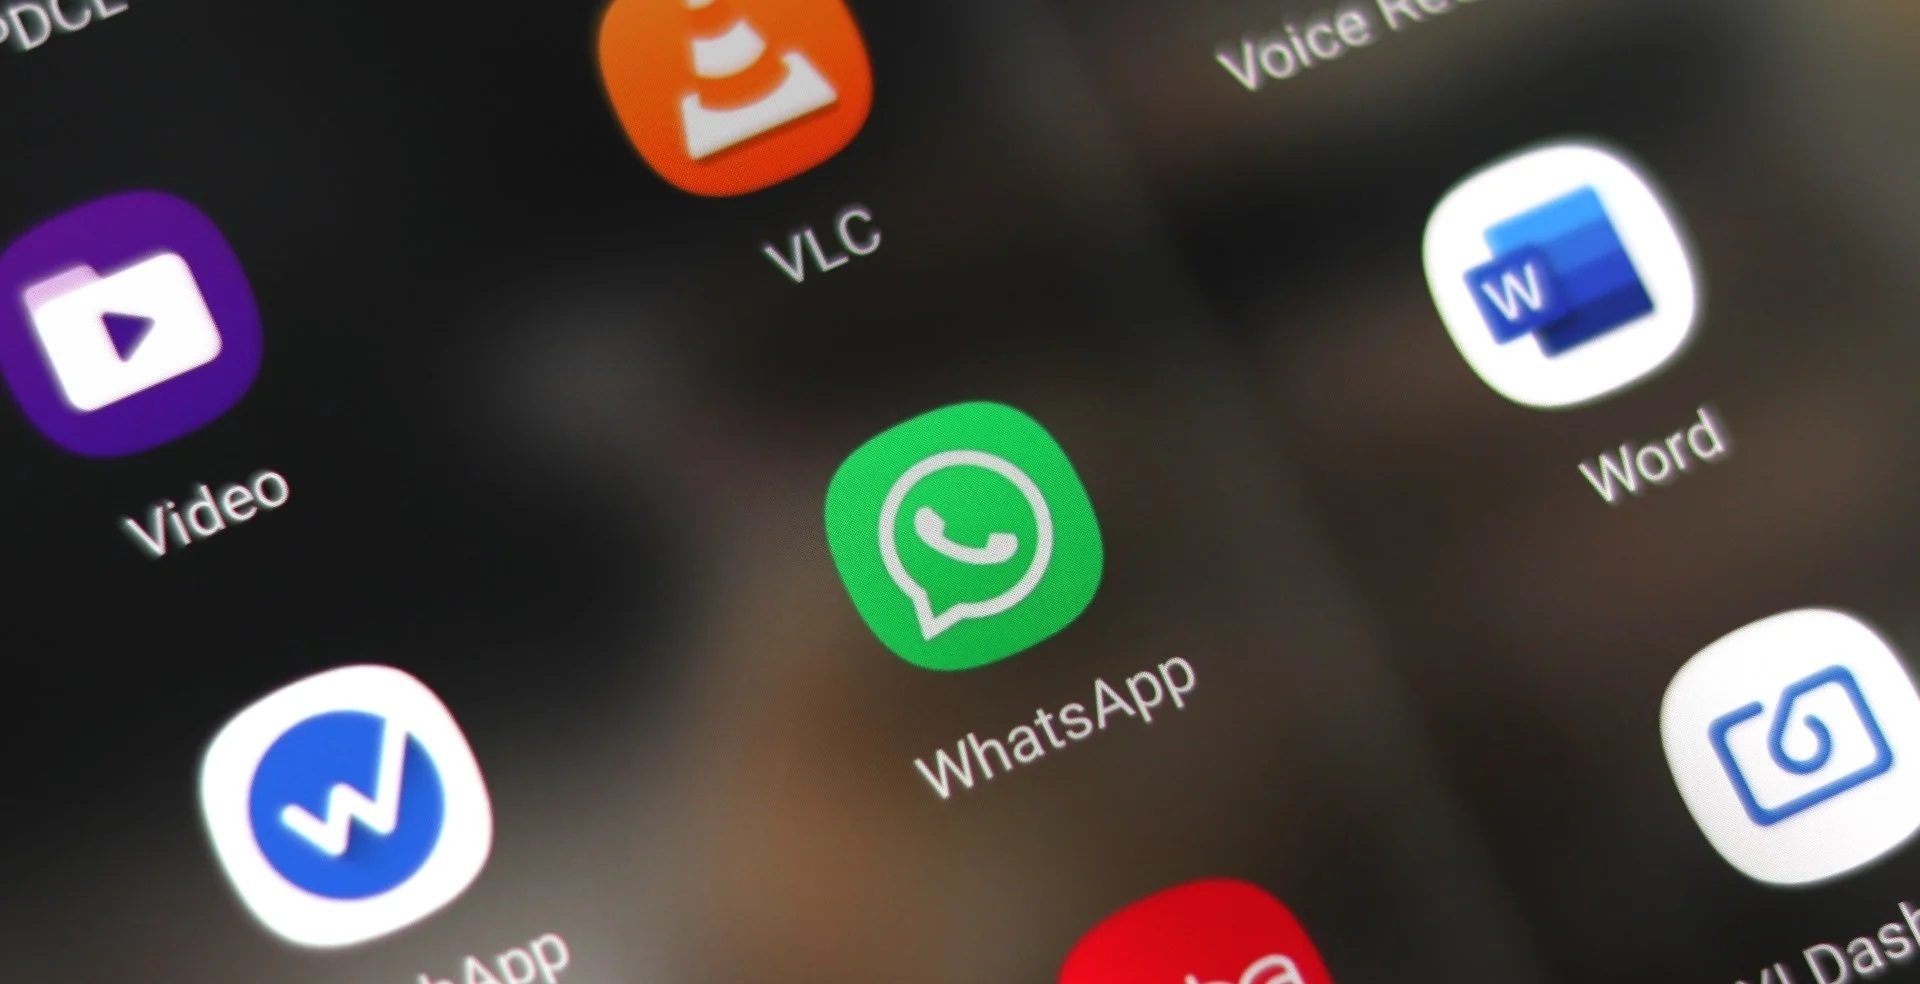 WhatsApp Begins Work On Cross-Platform Messaging In Response To EU Regulation